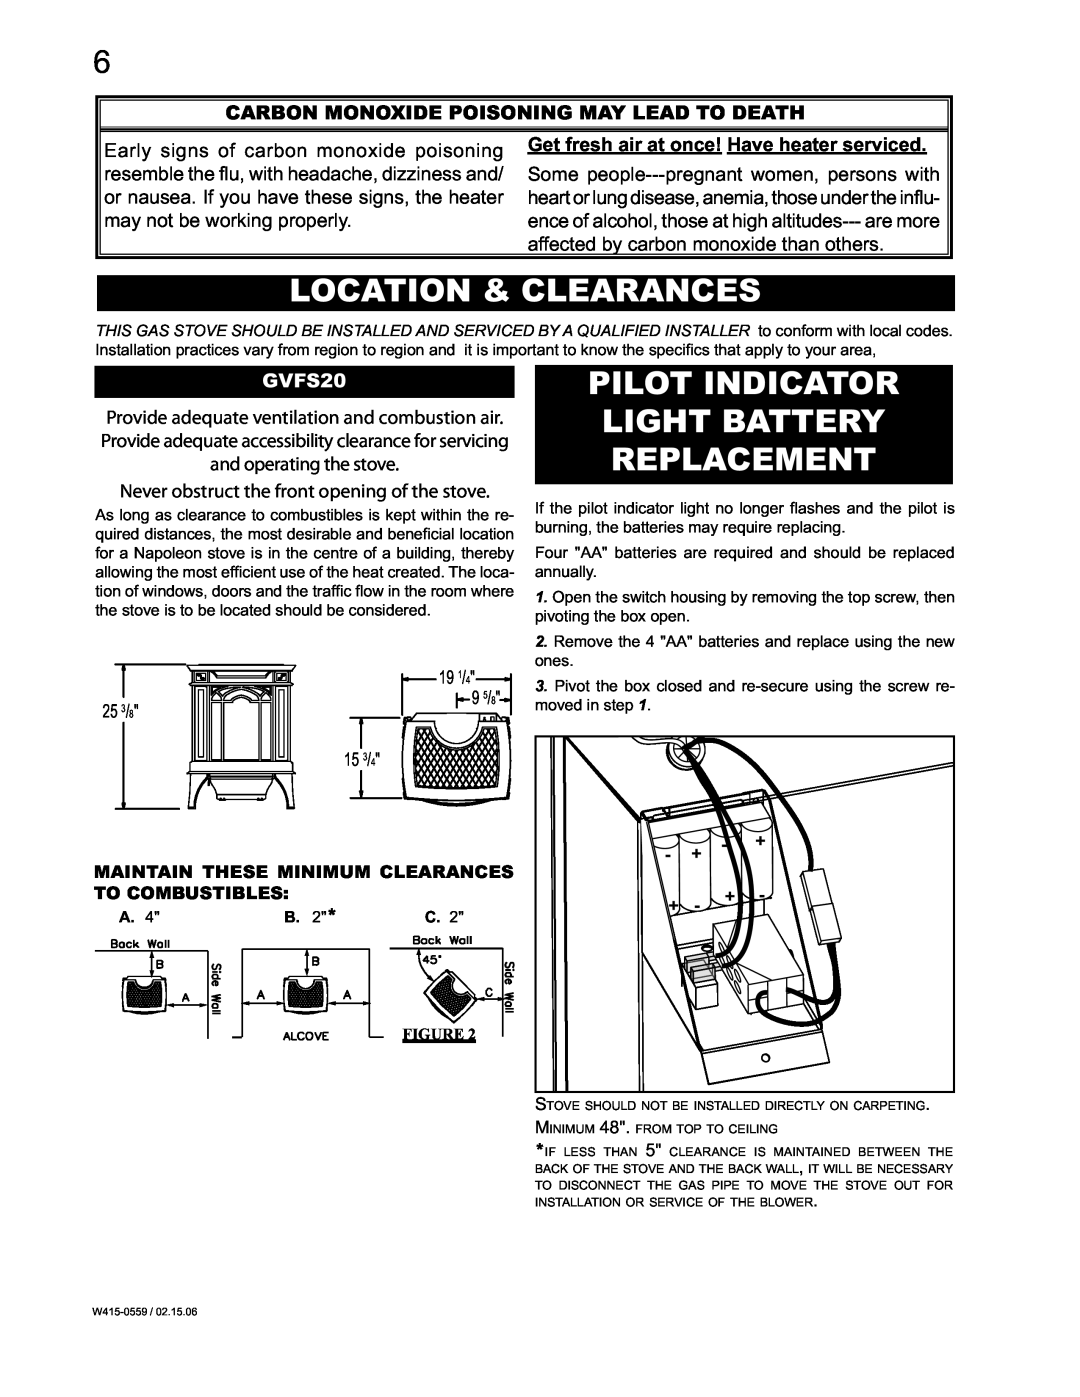 Napoleon Fireplaces GVFS20N, GVFS20P manual Location & Clearances, Pilot Indicator Light Battery Replacement 